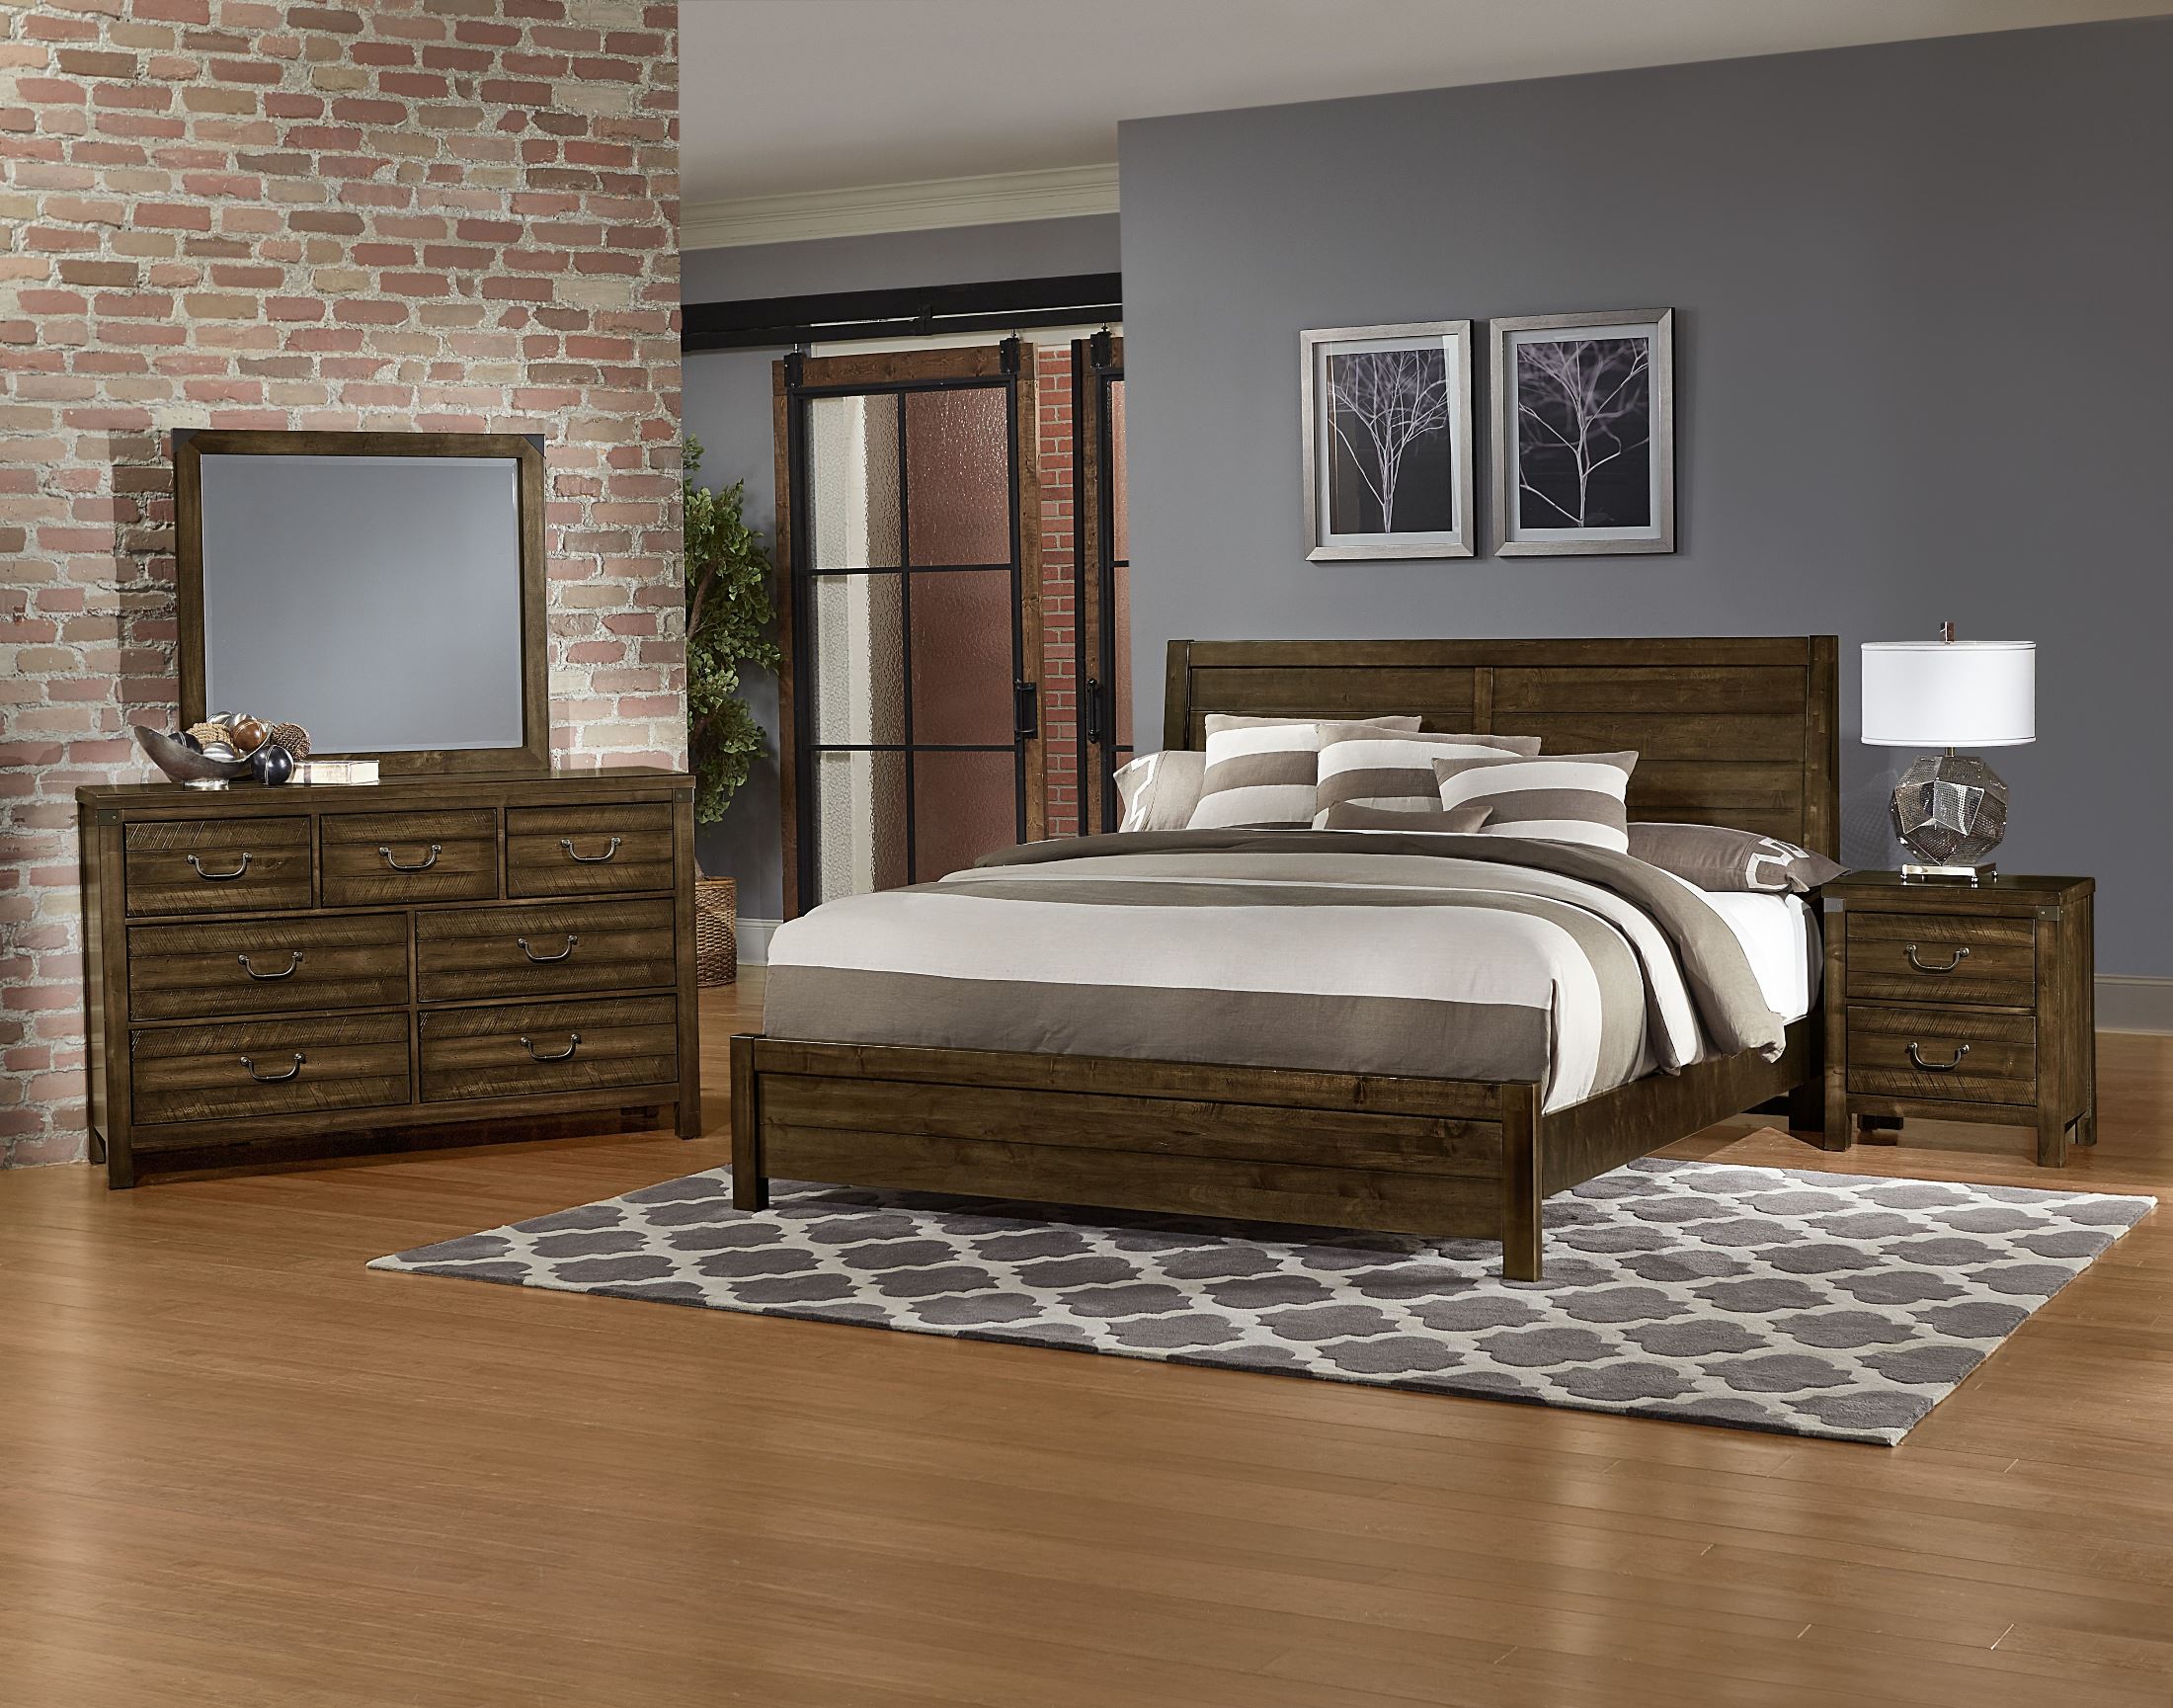 wardrobe maple bedroom furniture